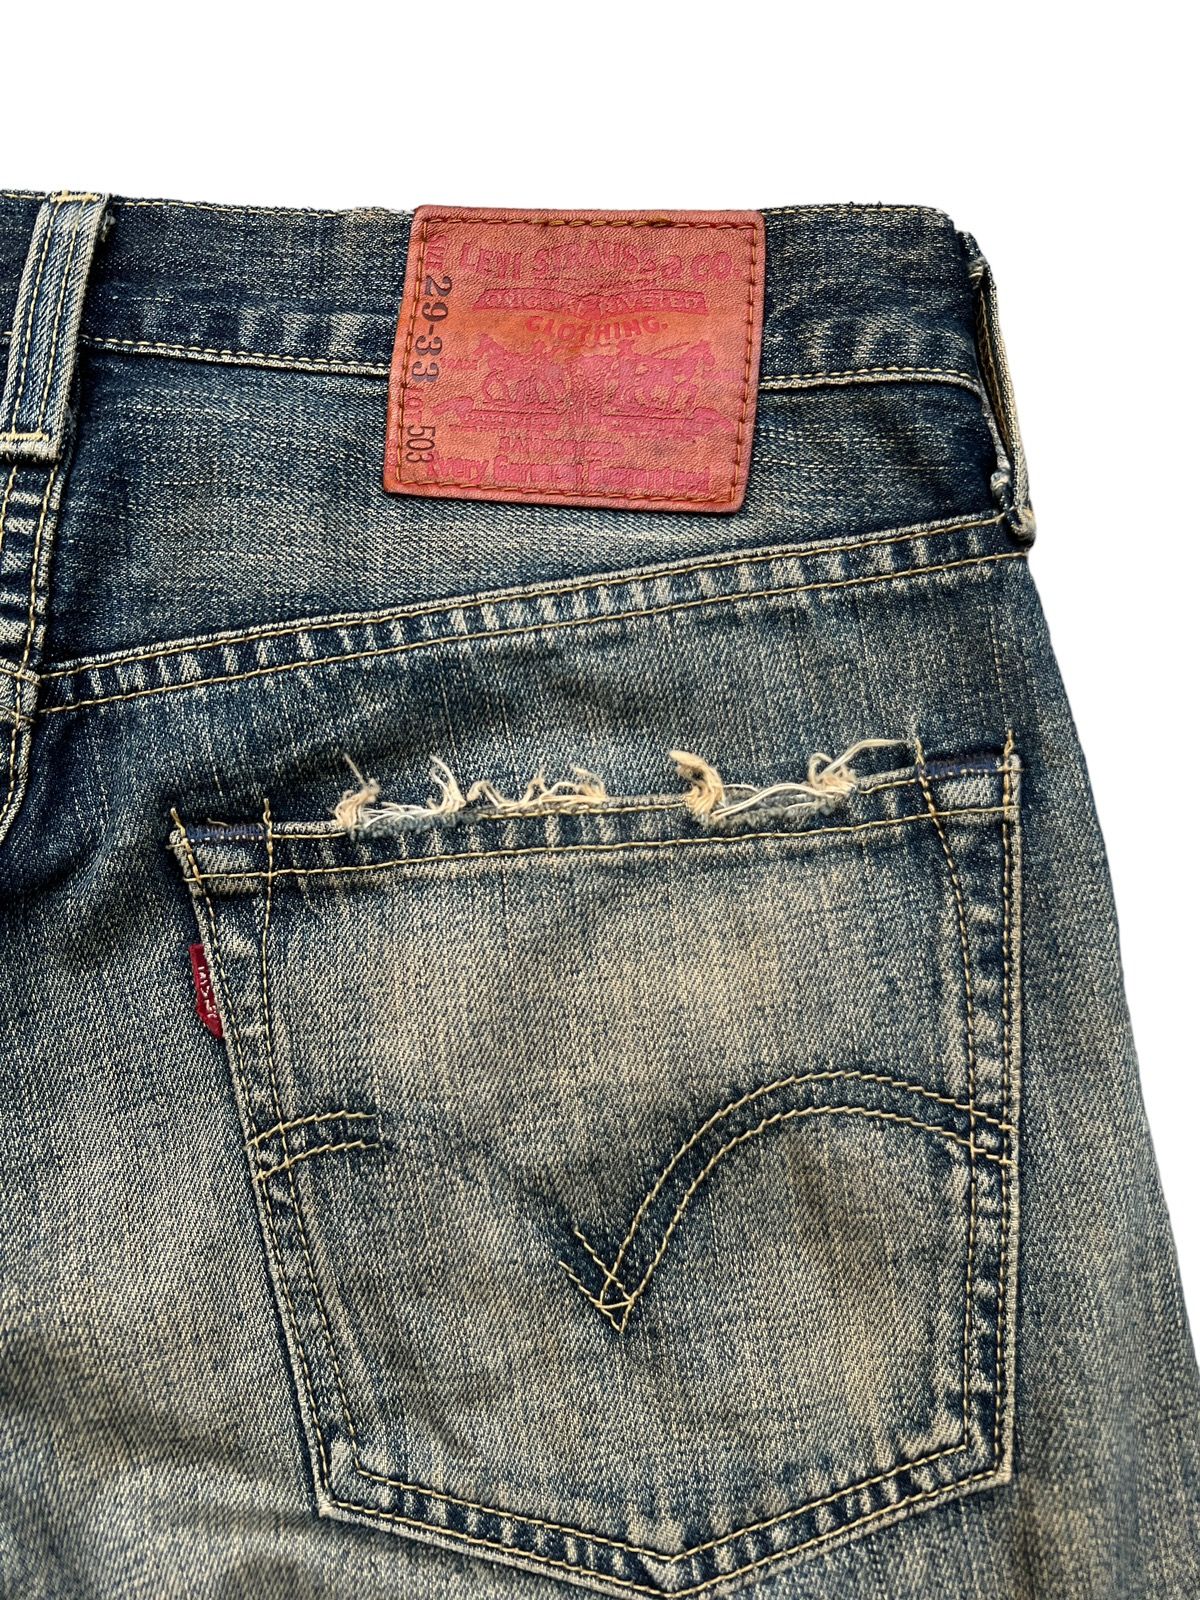 Vintage Levi’s 503 Distressed Rusty Denim Jeans 30x32 - 13